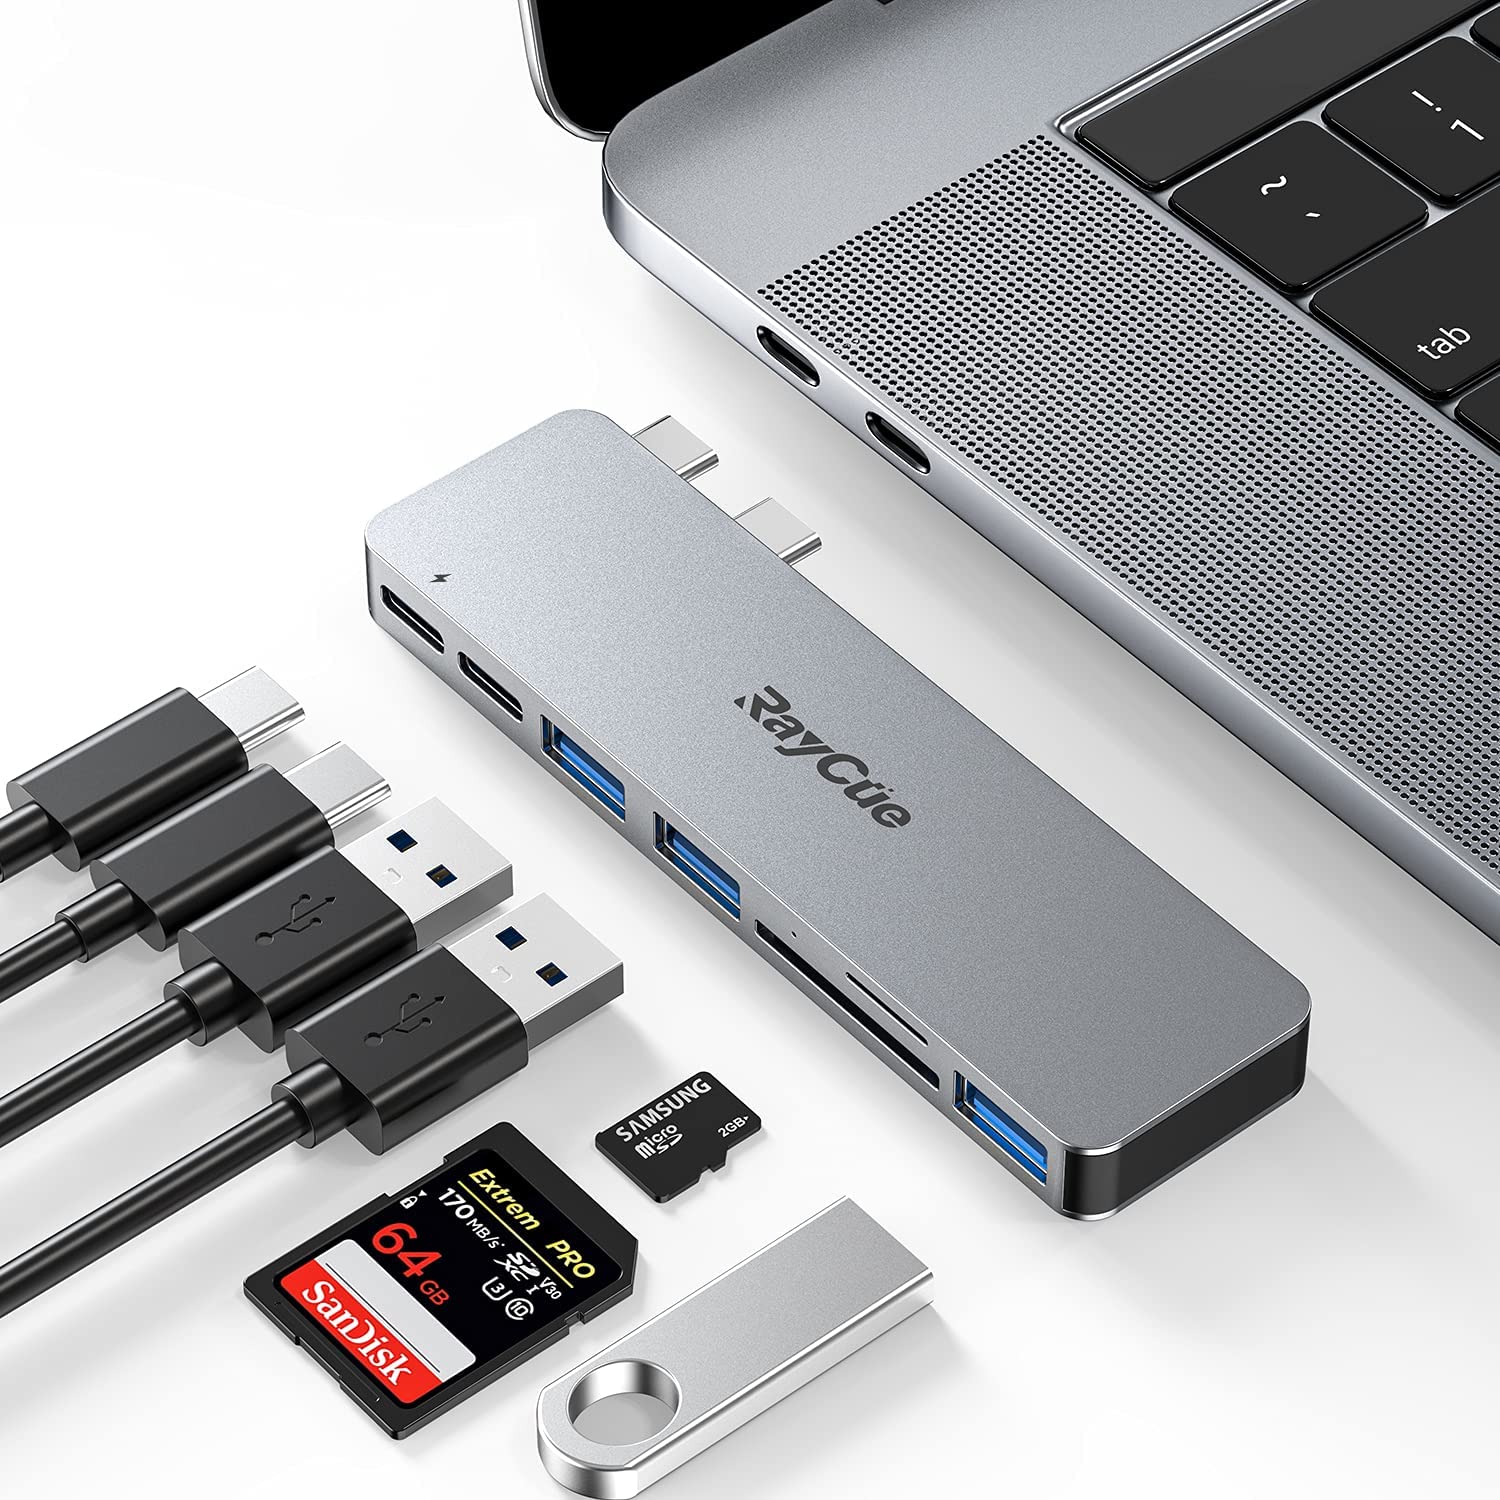 Raycue 7-in-1 MacBook Pro/Air M1 USB Accessories